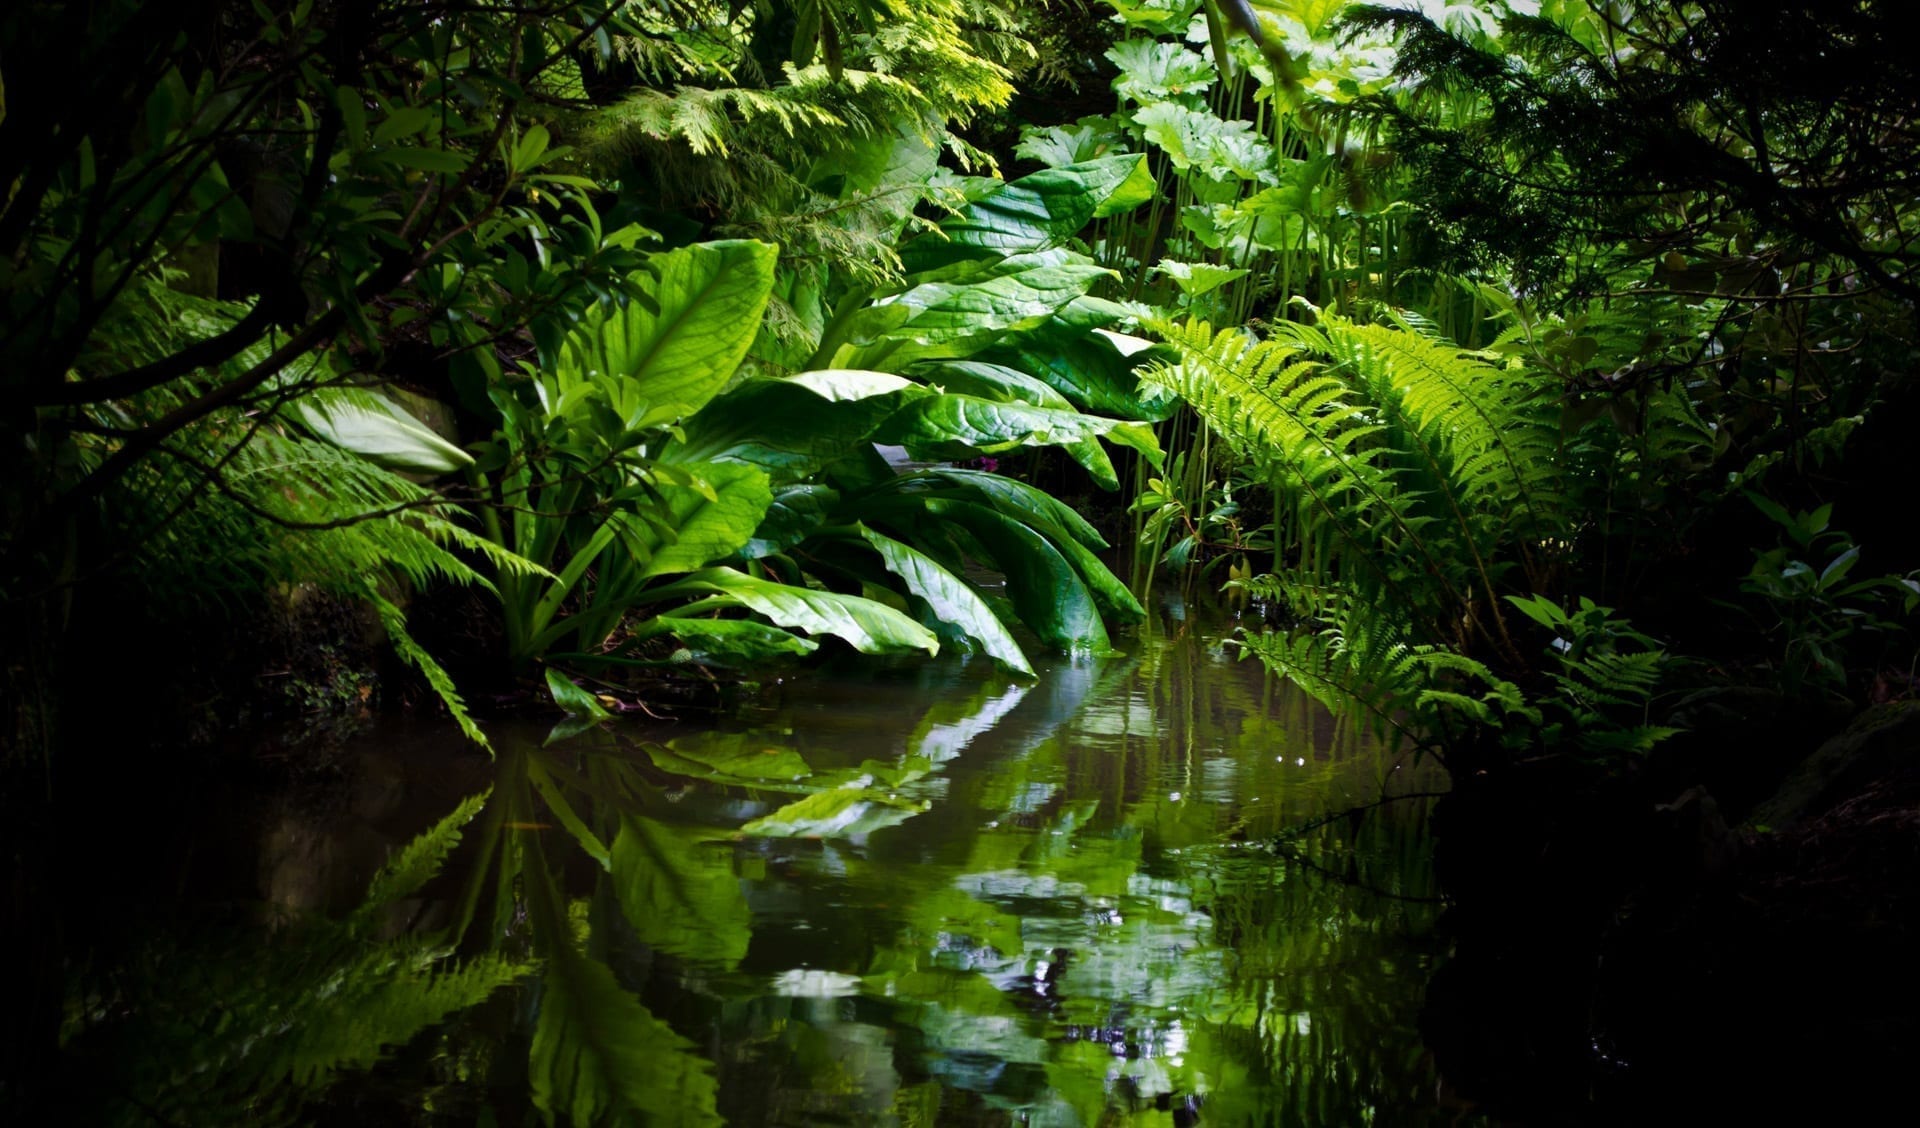 Jungle foliage with water, photo credit: George Hodan